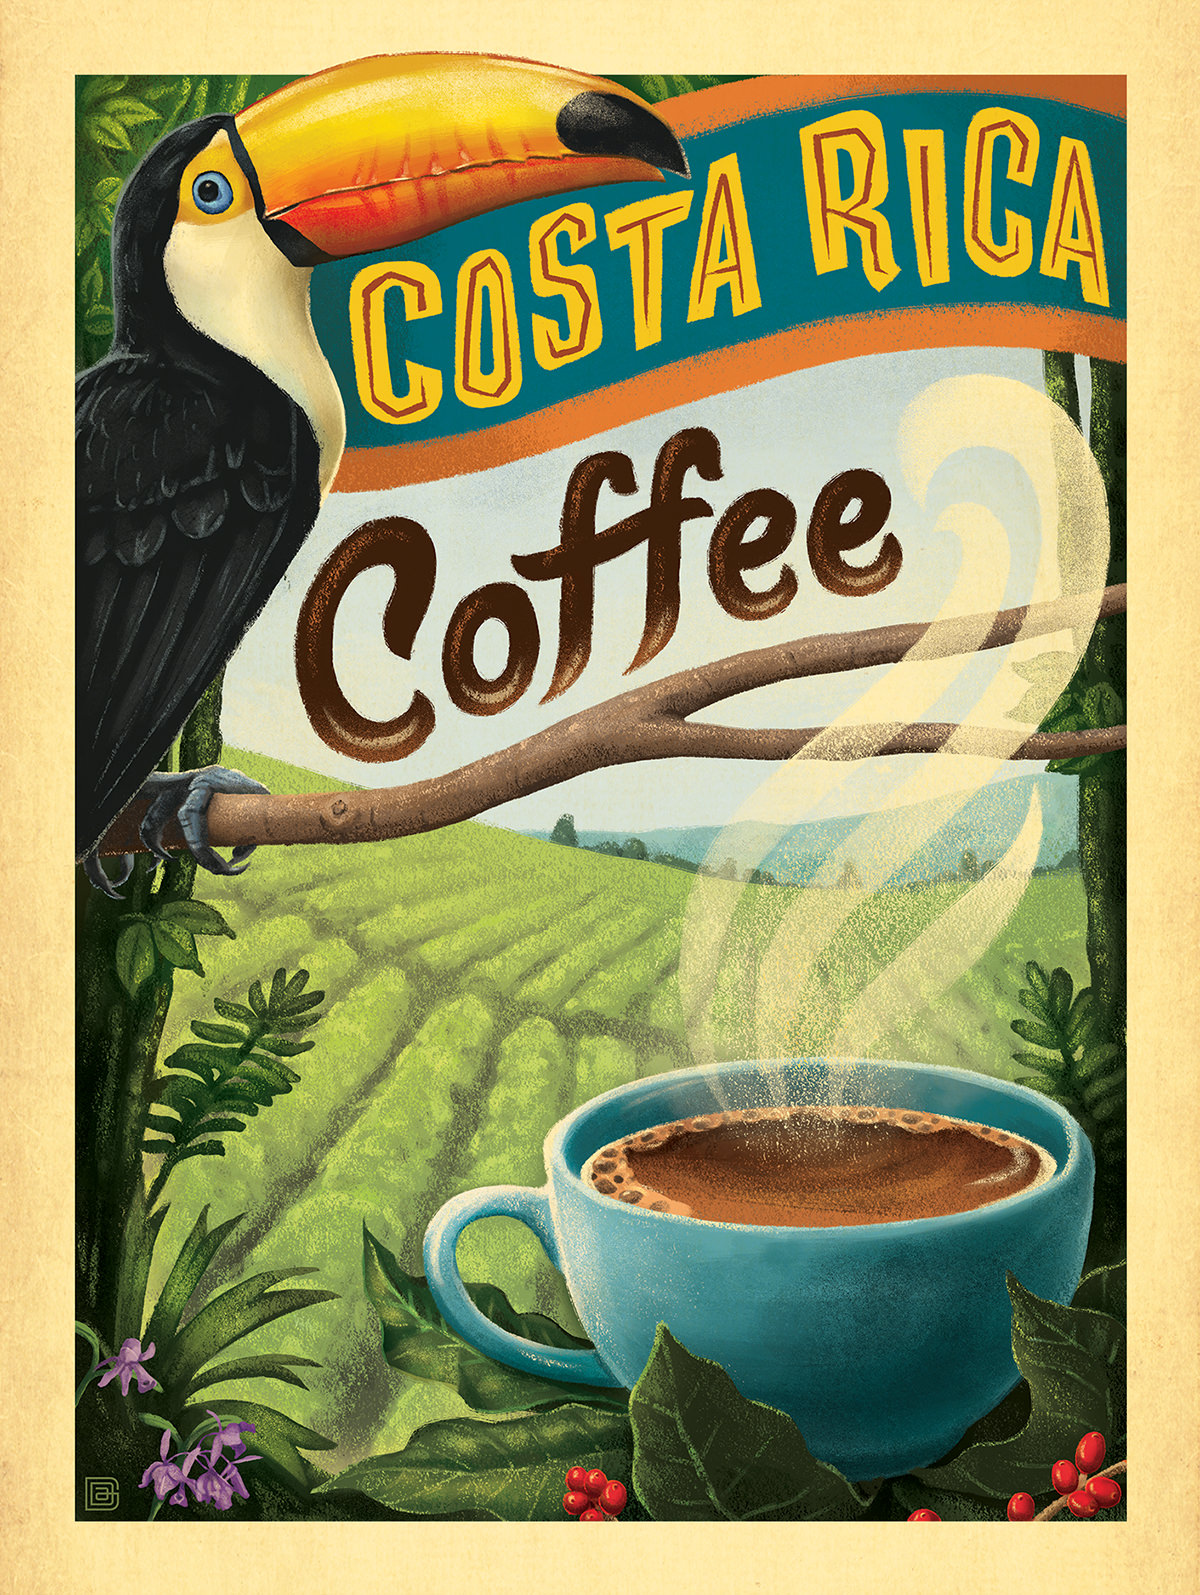 Costa Rican coffee bean image